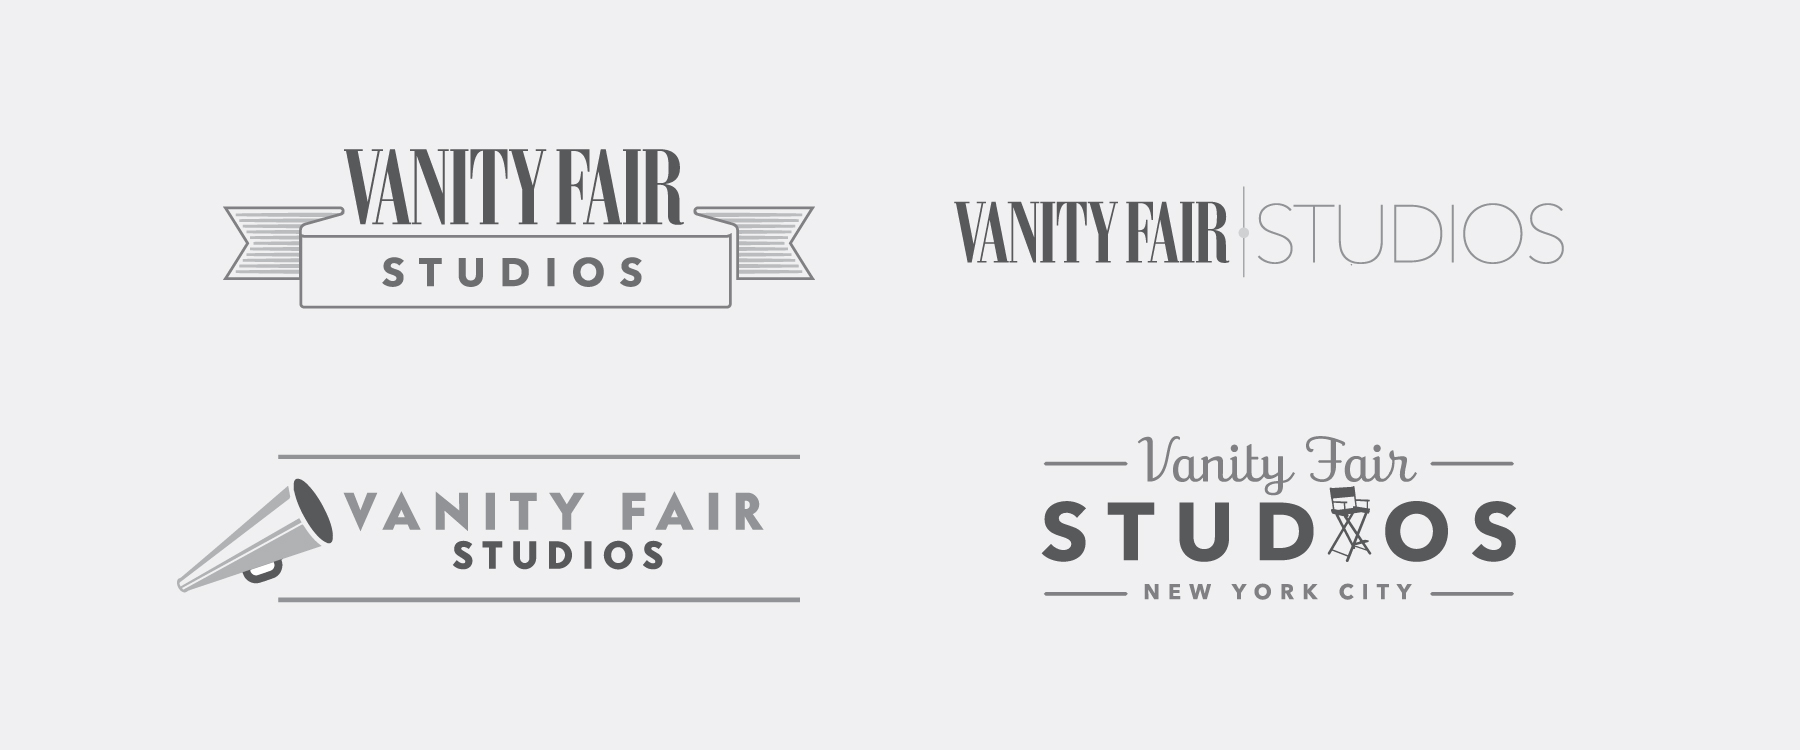 Vanity Fair Studios